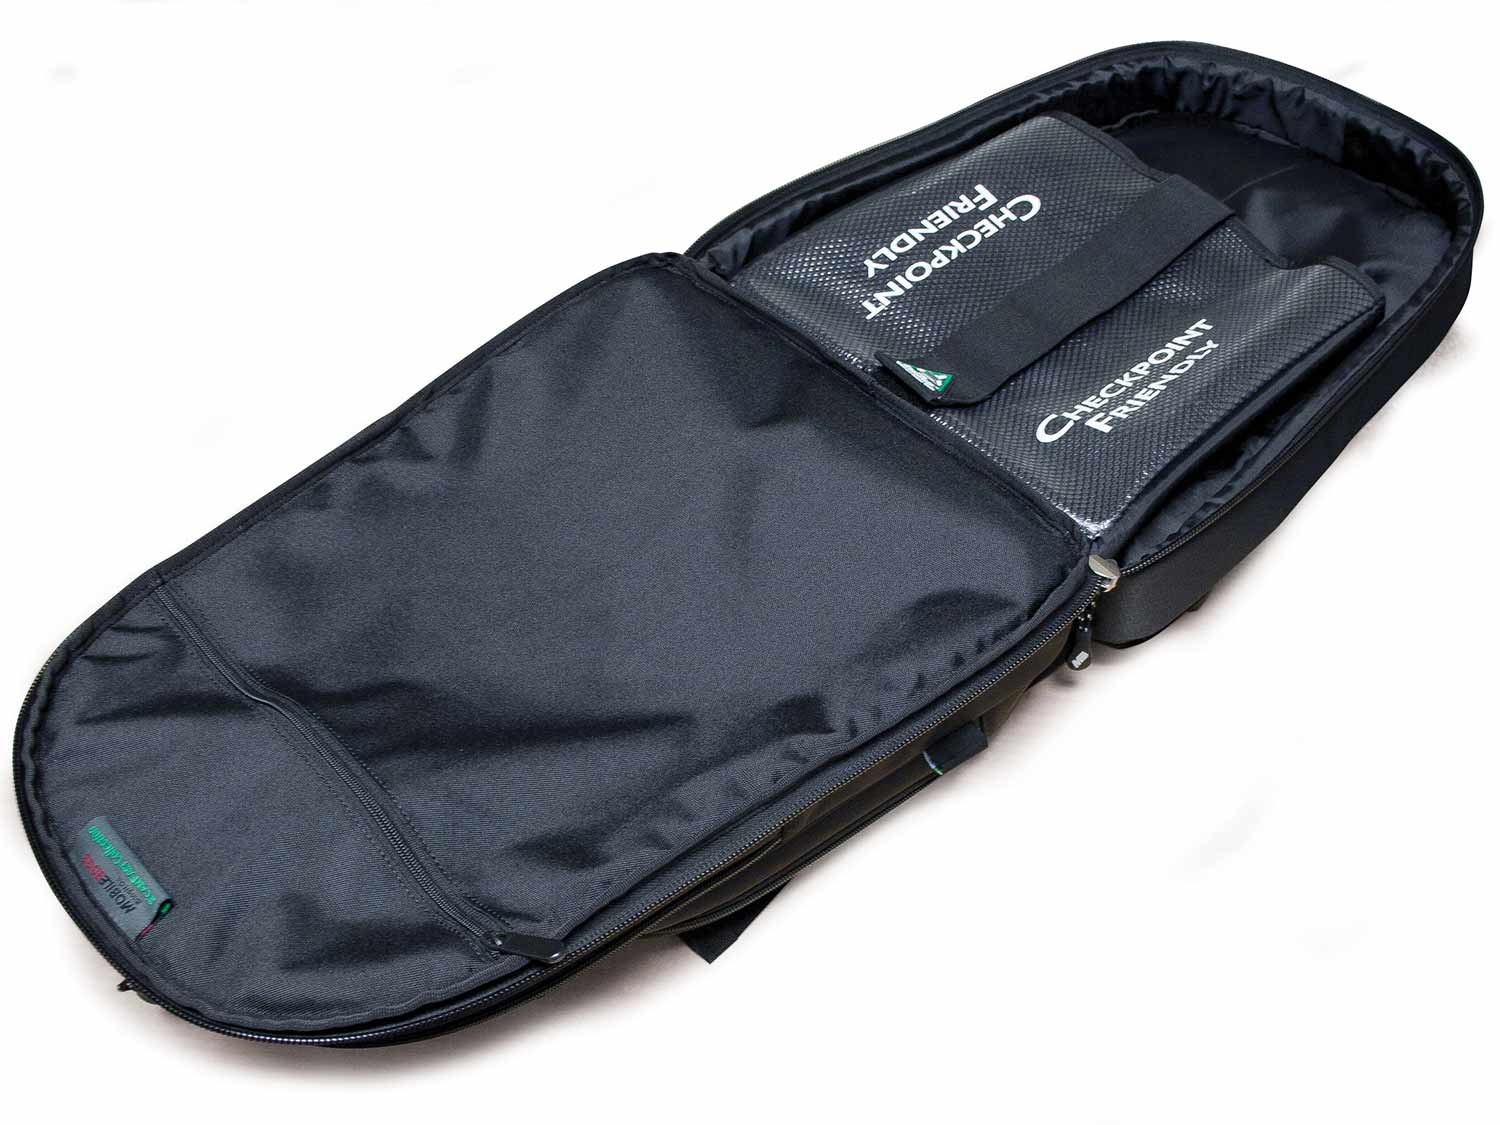 Mobile Edge backpack